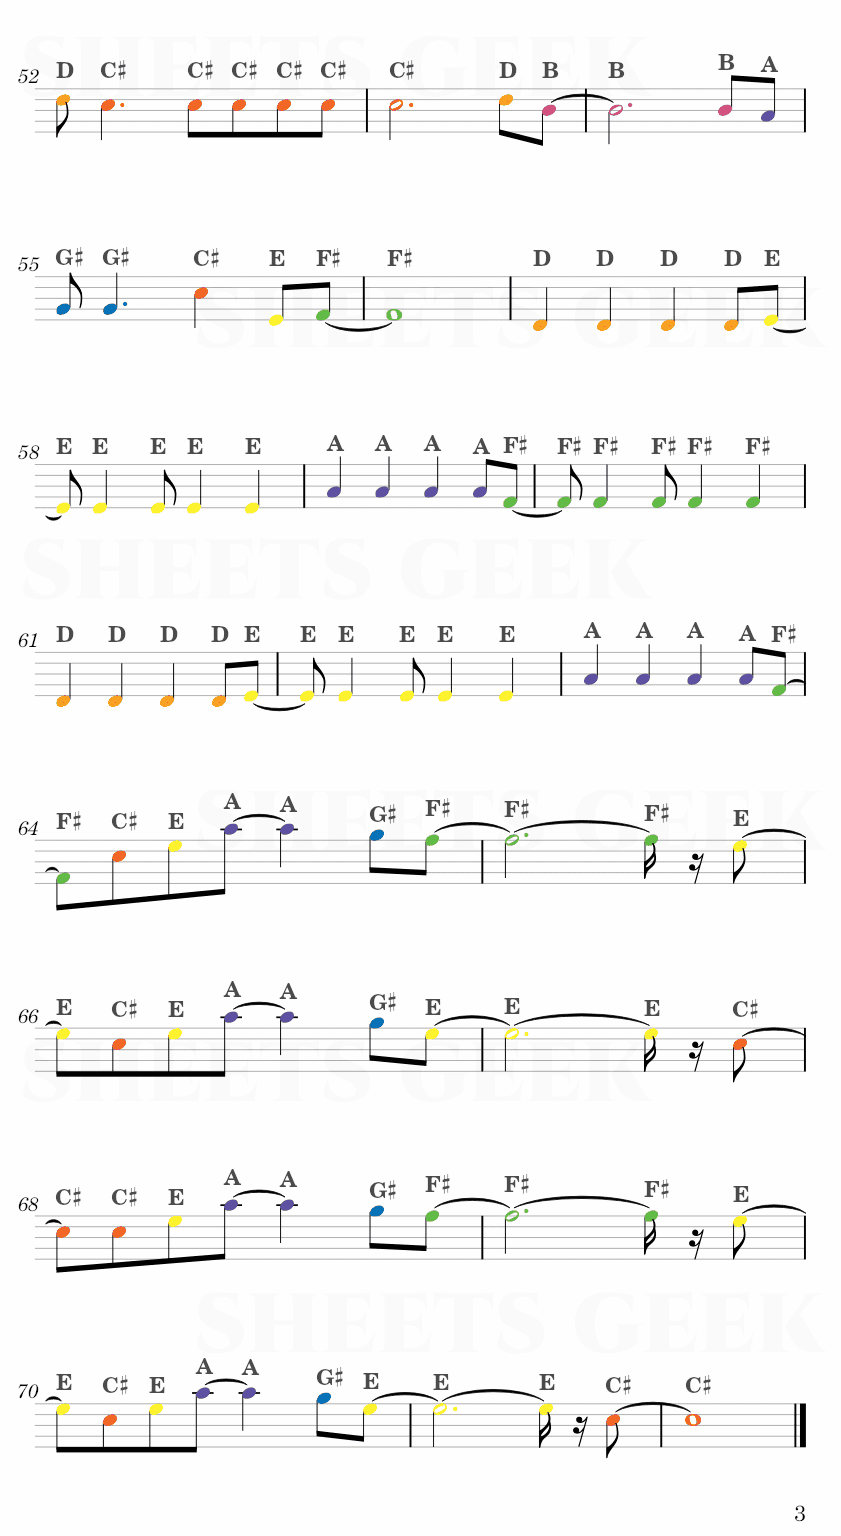 Viva La Vida - Coldplay Easy Sheet Music Free for piano, keyboard, flute, violin, sax, cello page 3